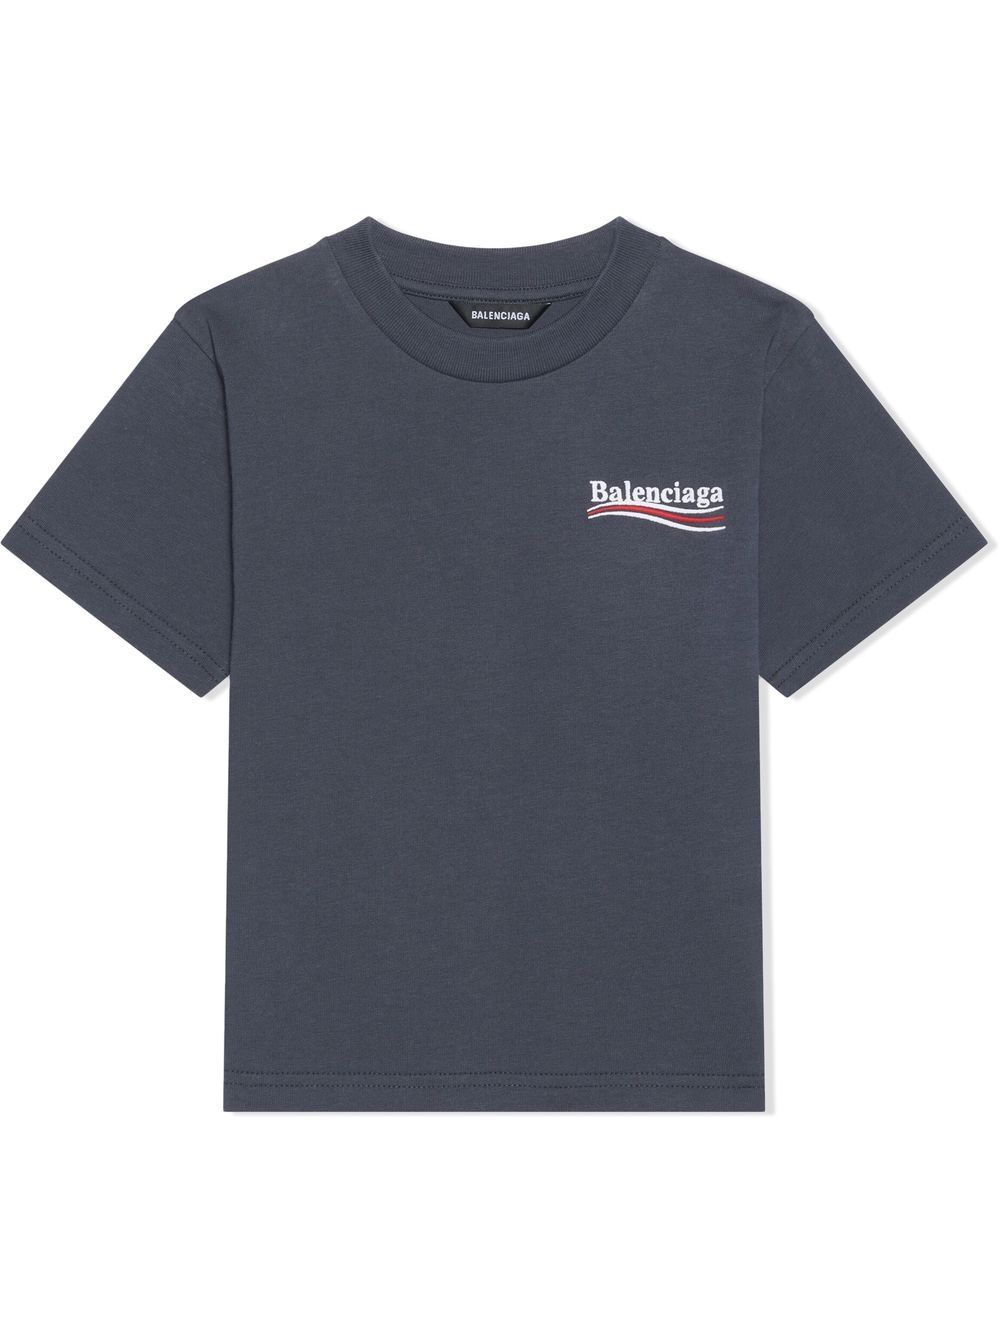 Balenciaga Kids' Political Campaign T-shirt In Grey